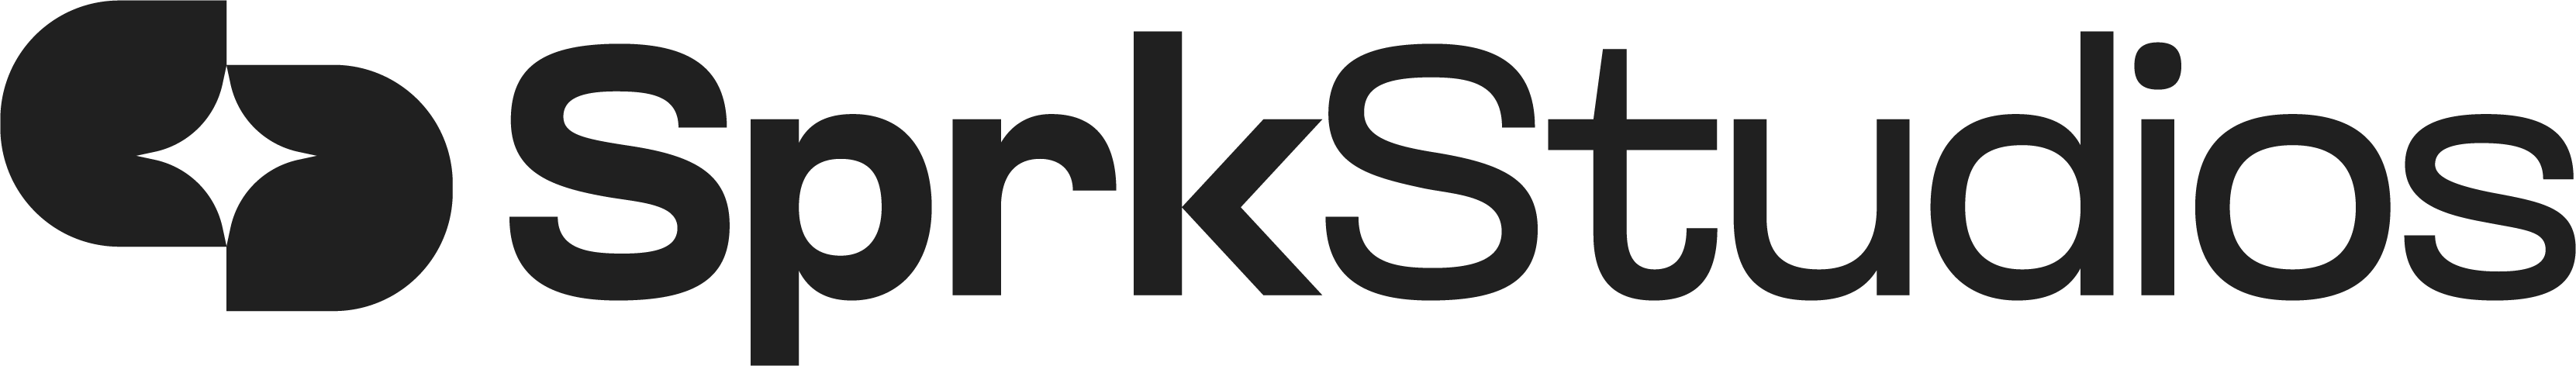 Sprk Studios Digital Marketing Agency